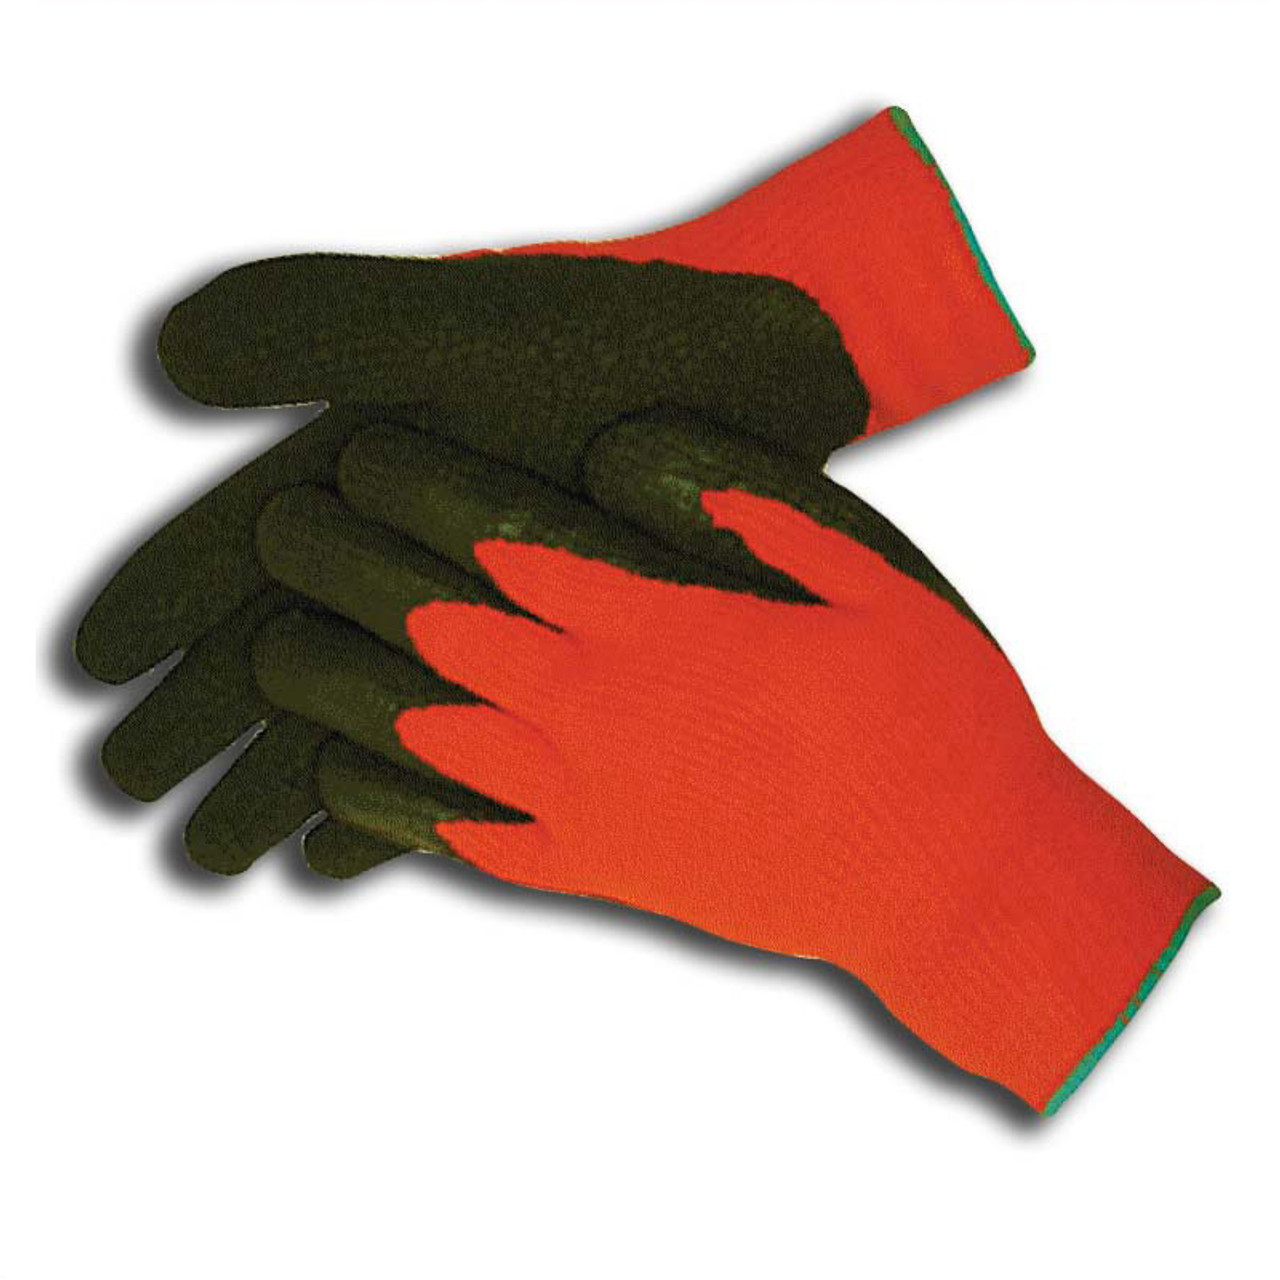 https://cdn11.bigcommerce.com/s-49j9i6u61/images/stencil/1280x1280/products/5196/5716/hi-vis-orange-insulated-rubber-palm-winter-work-gloves-685003-23__57958.1672345000.jpg?c=1